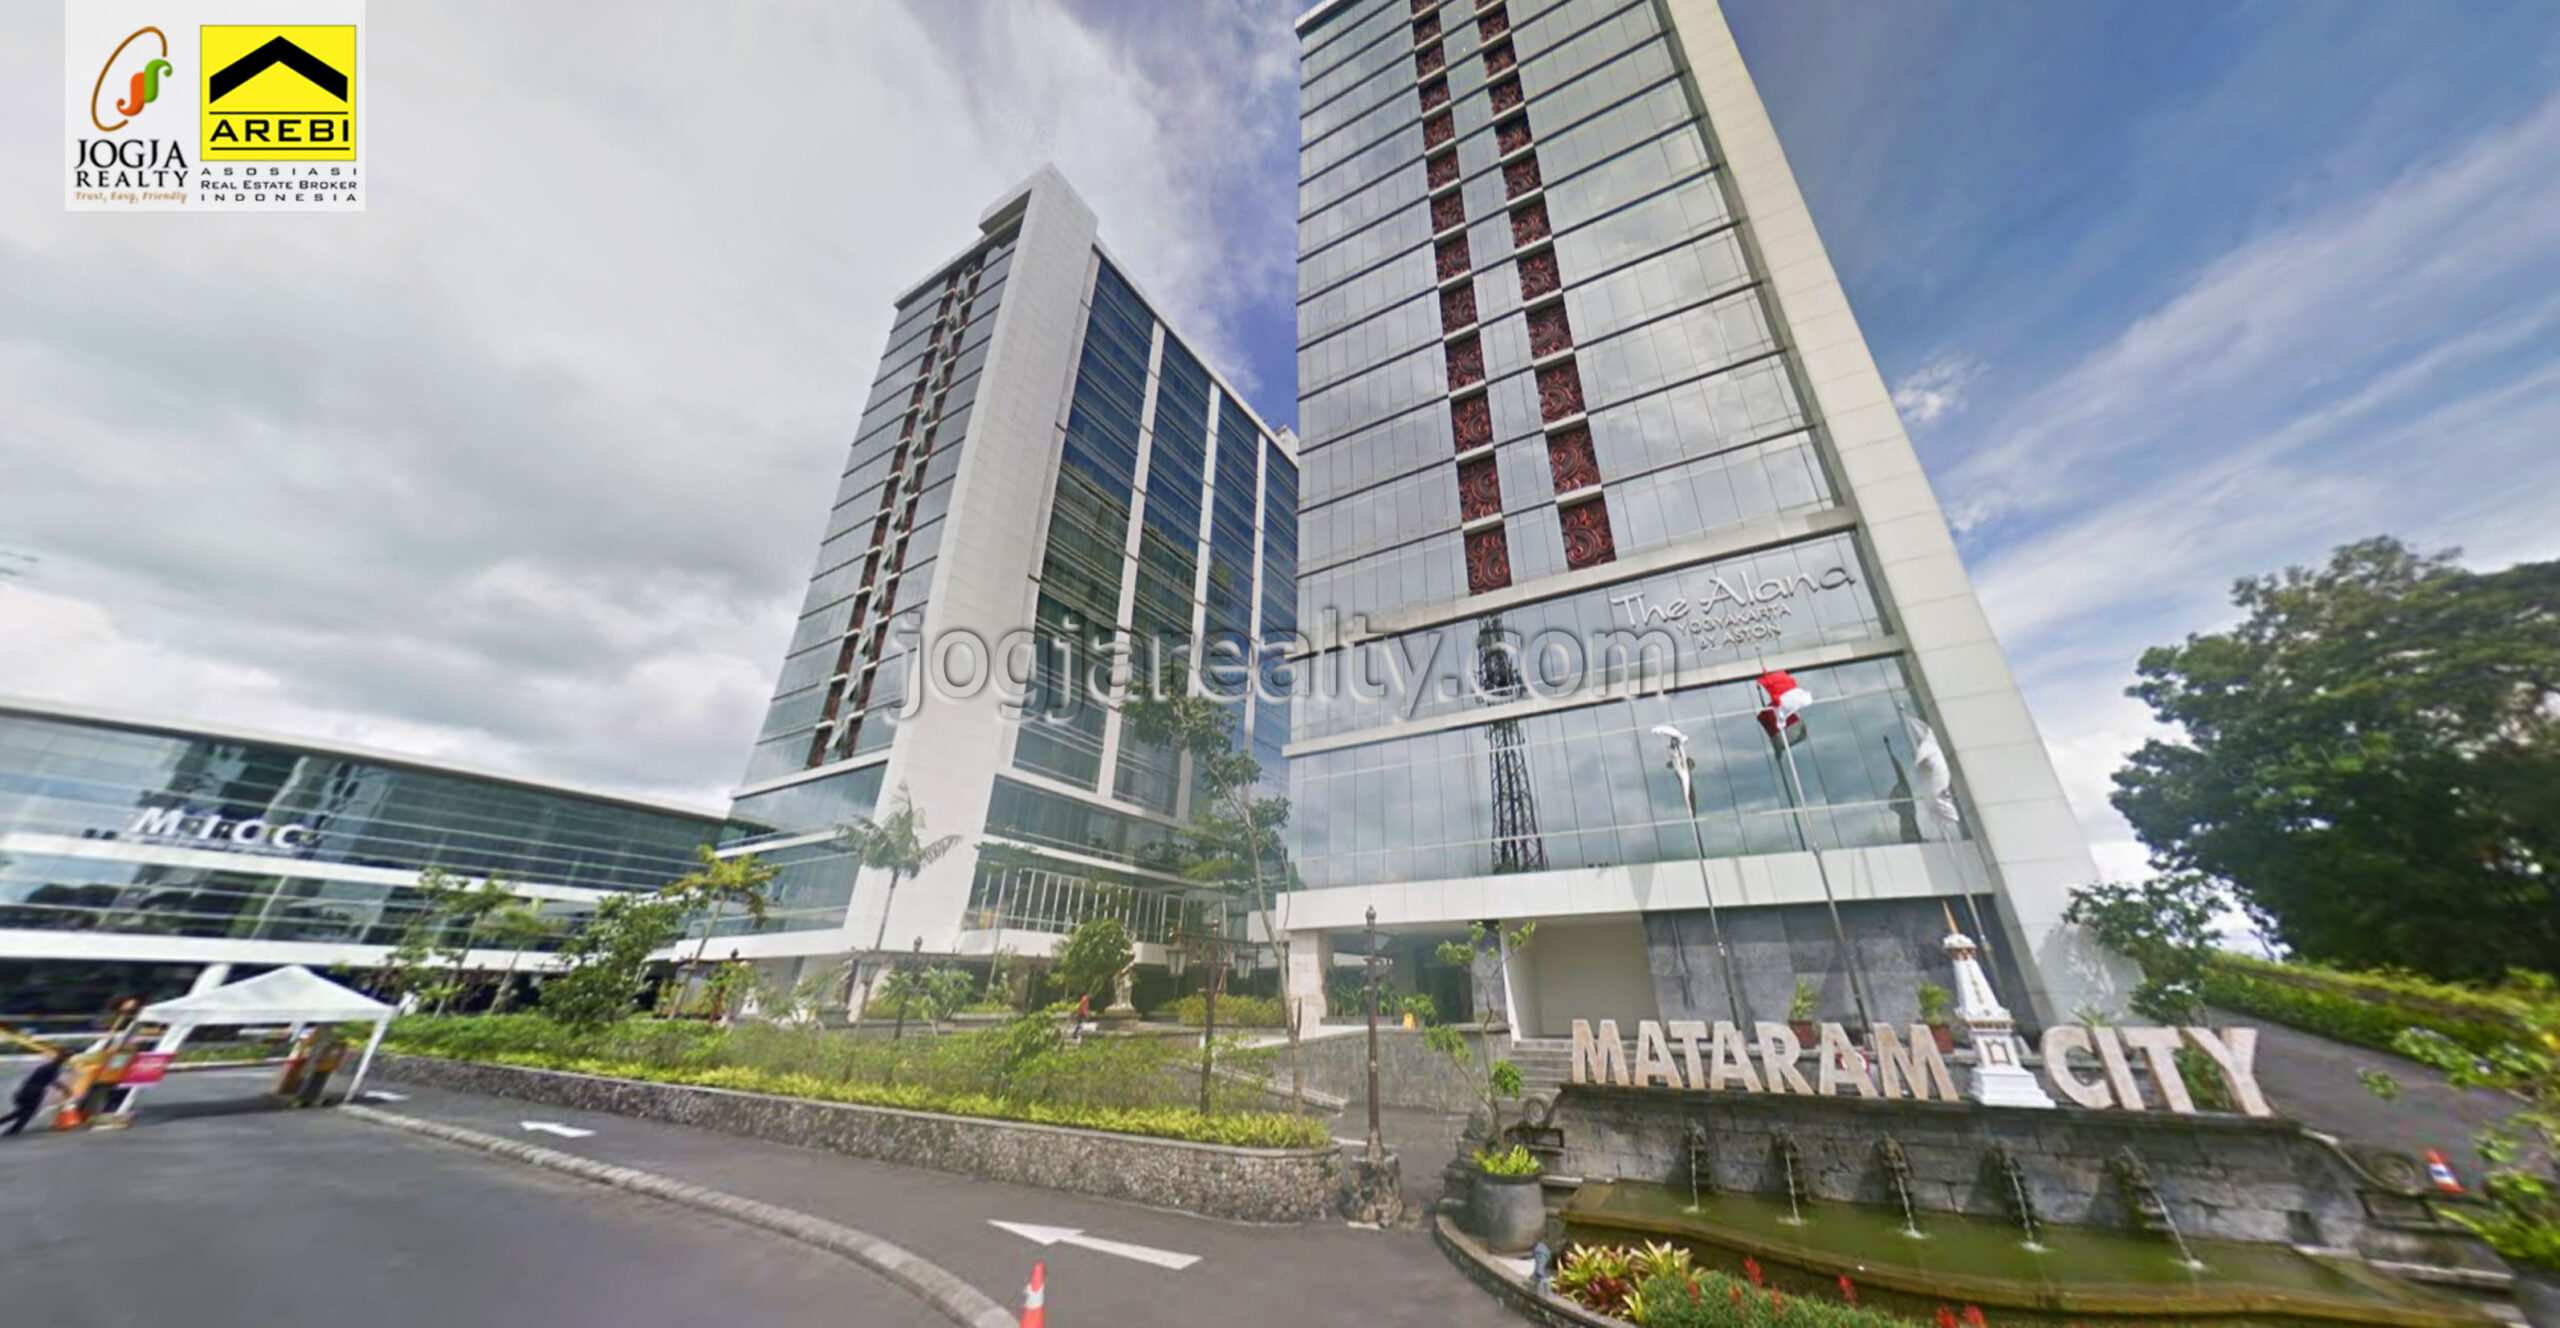 Apartemen fully furnished Mataram City Jogja